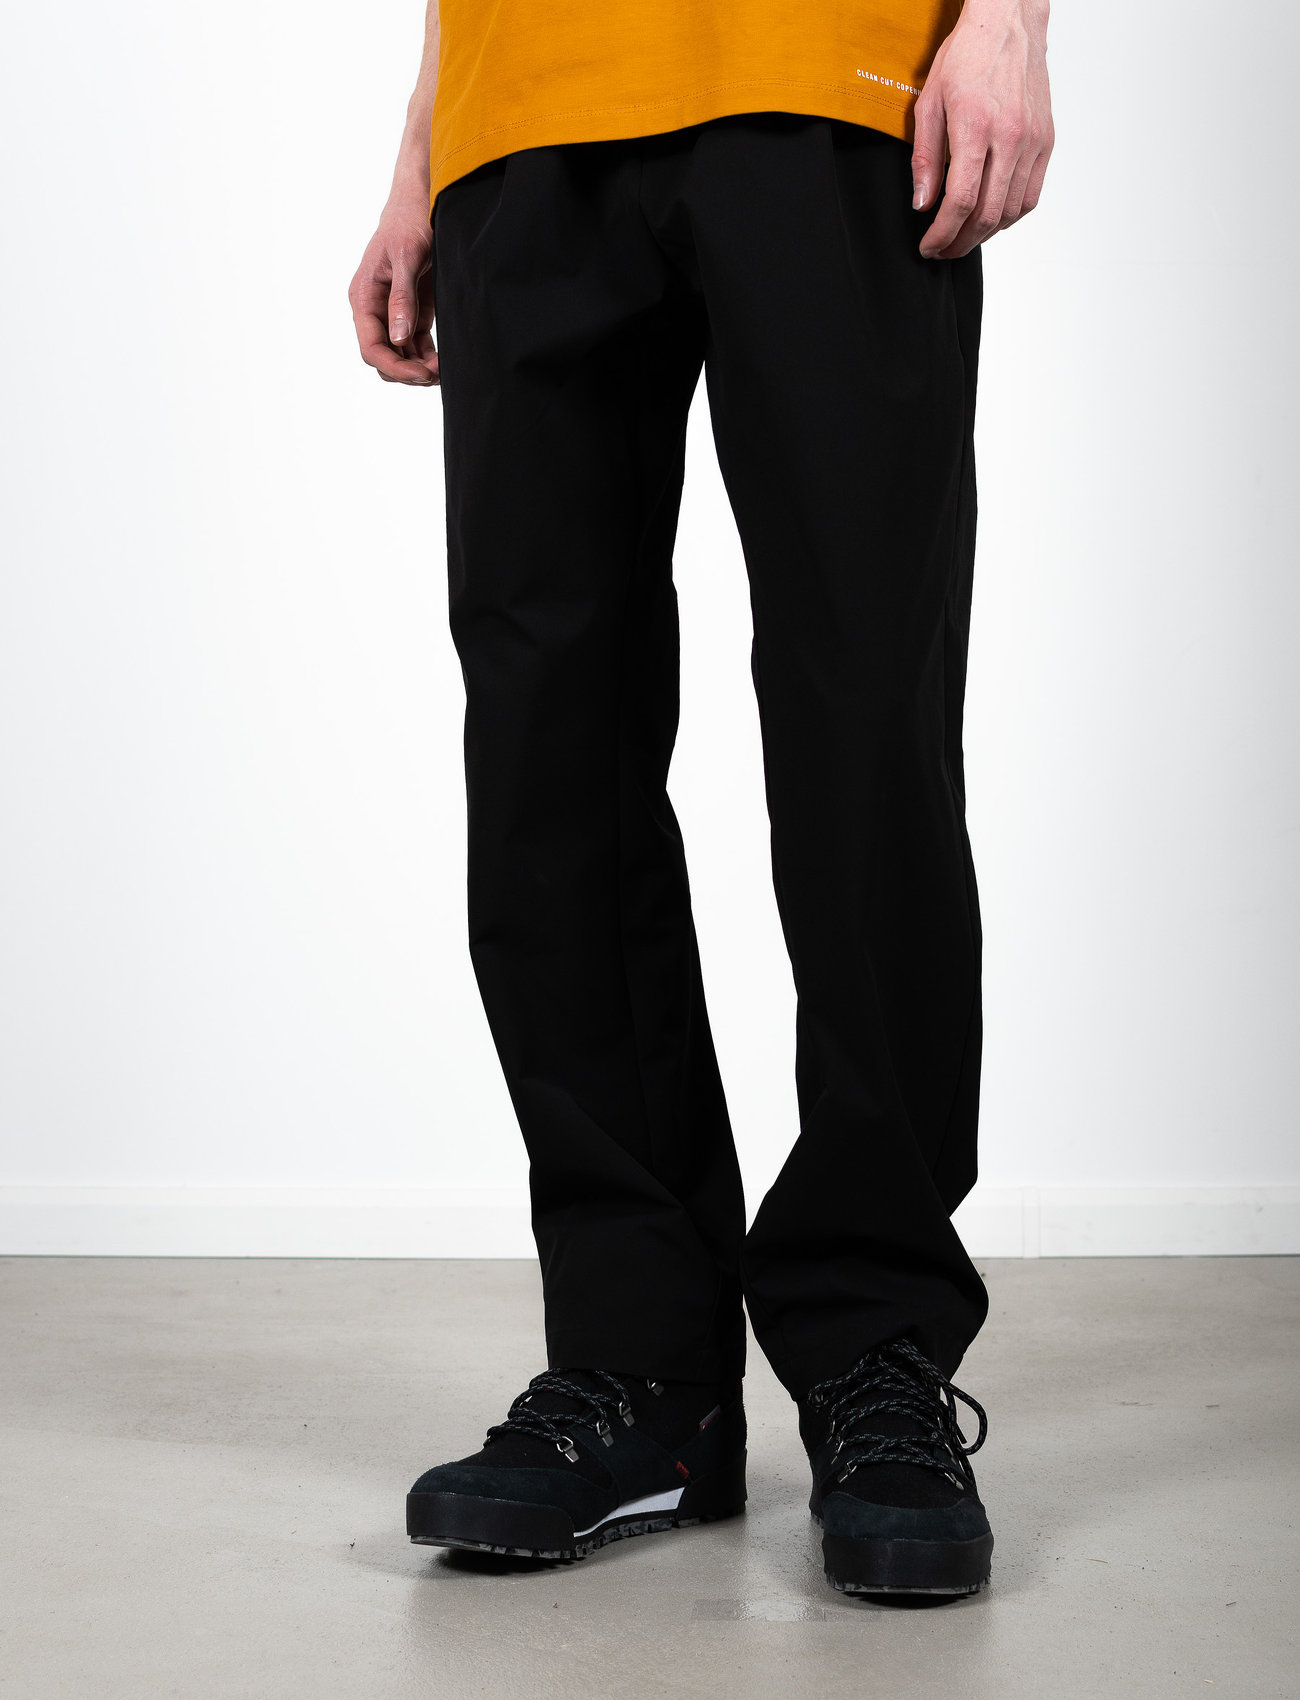 Clean Cut Copenhagen - Ruben Stretch Pants - spodnie na co dzień - black - 0